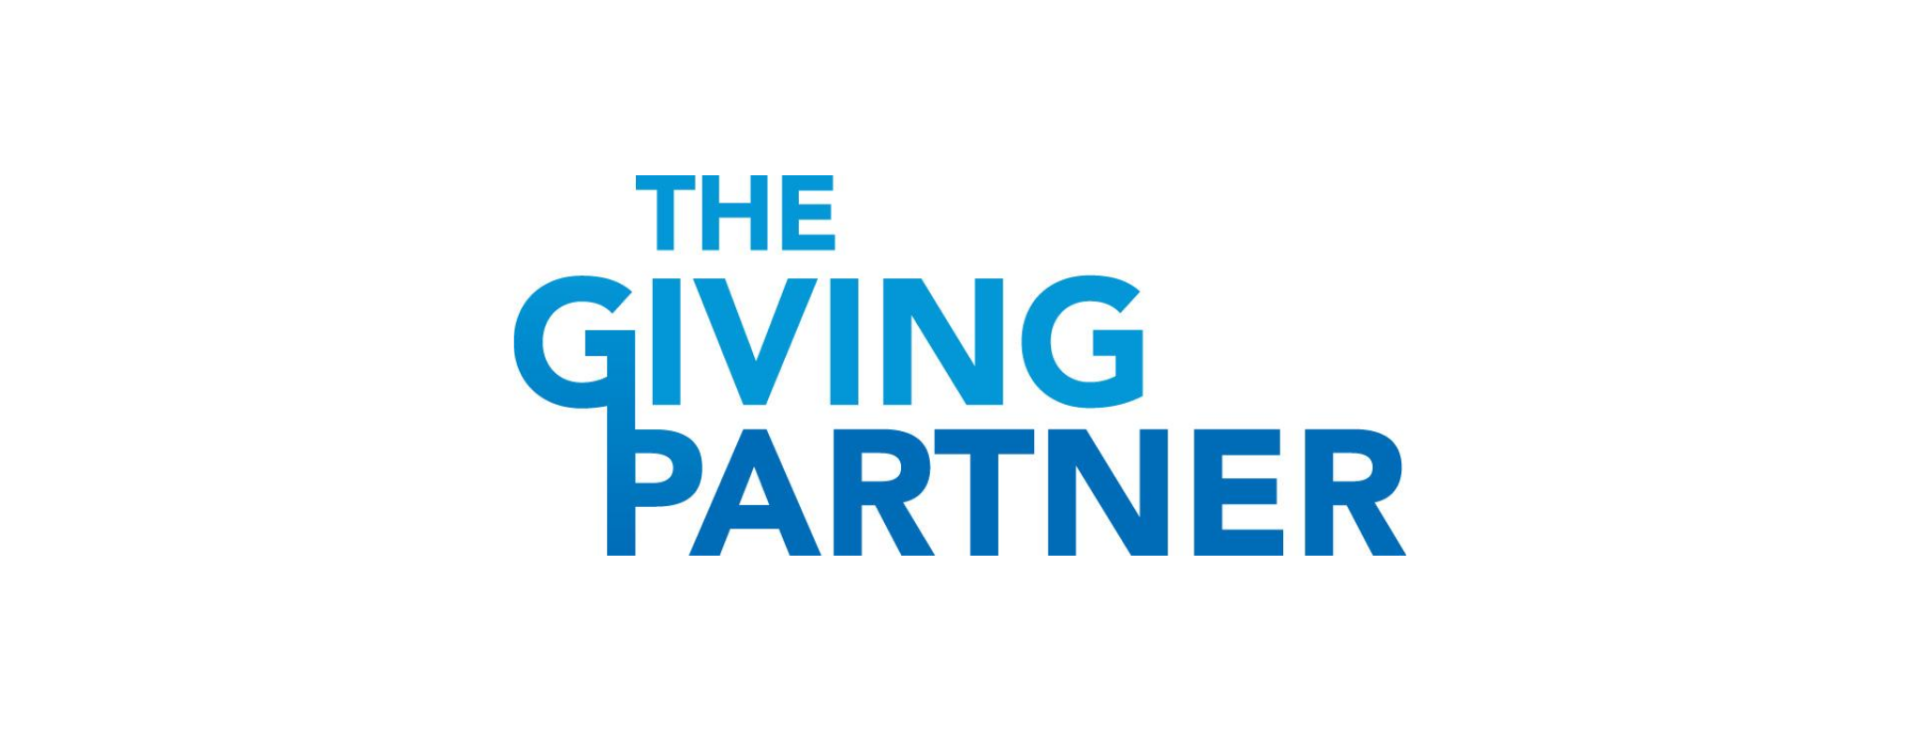 The Giving Partner Community Foundation of Sarasota County